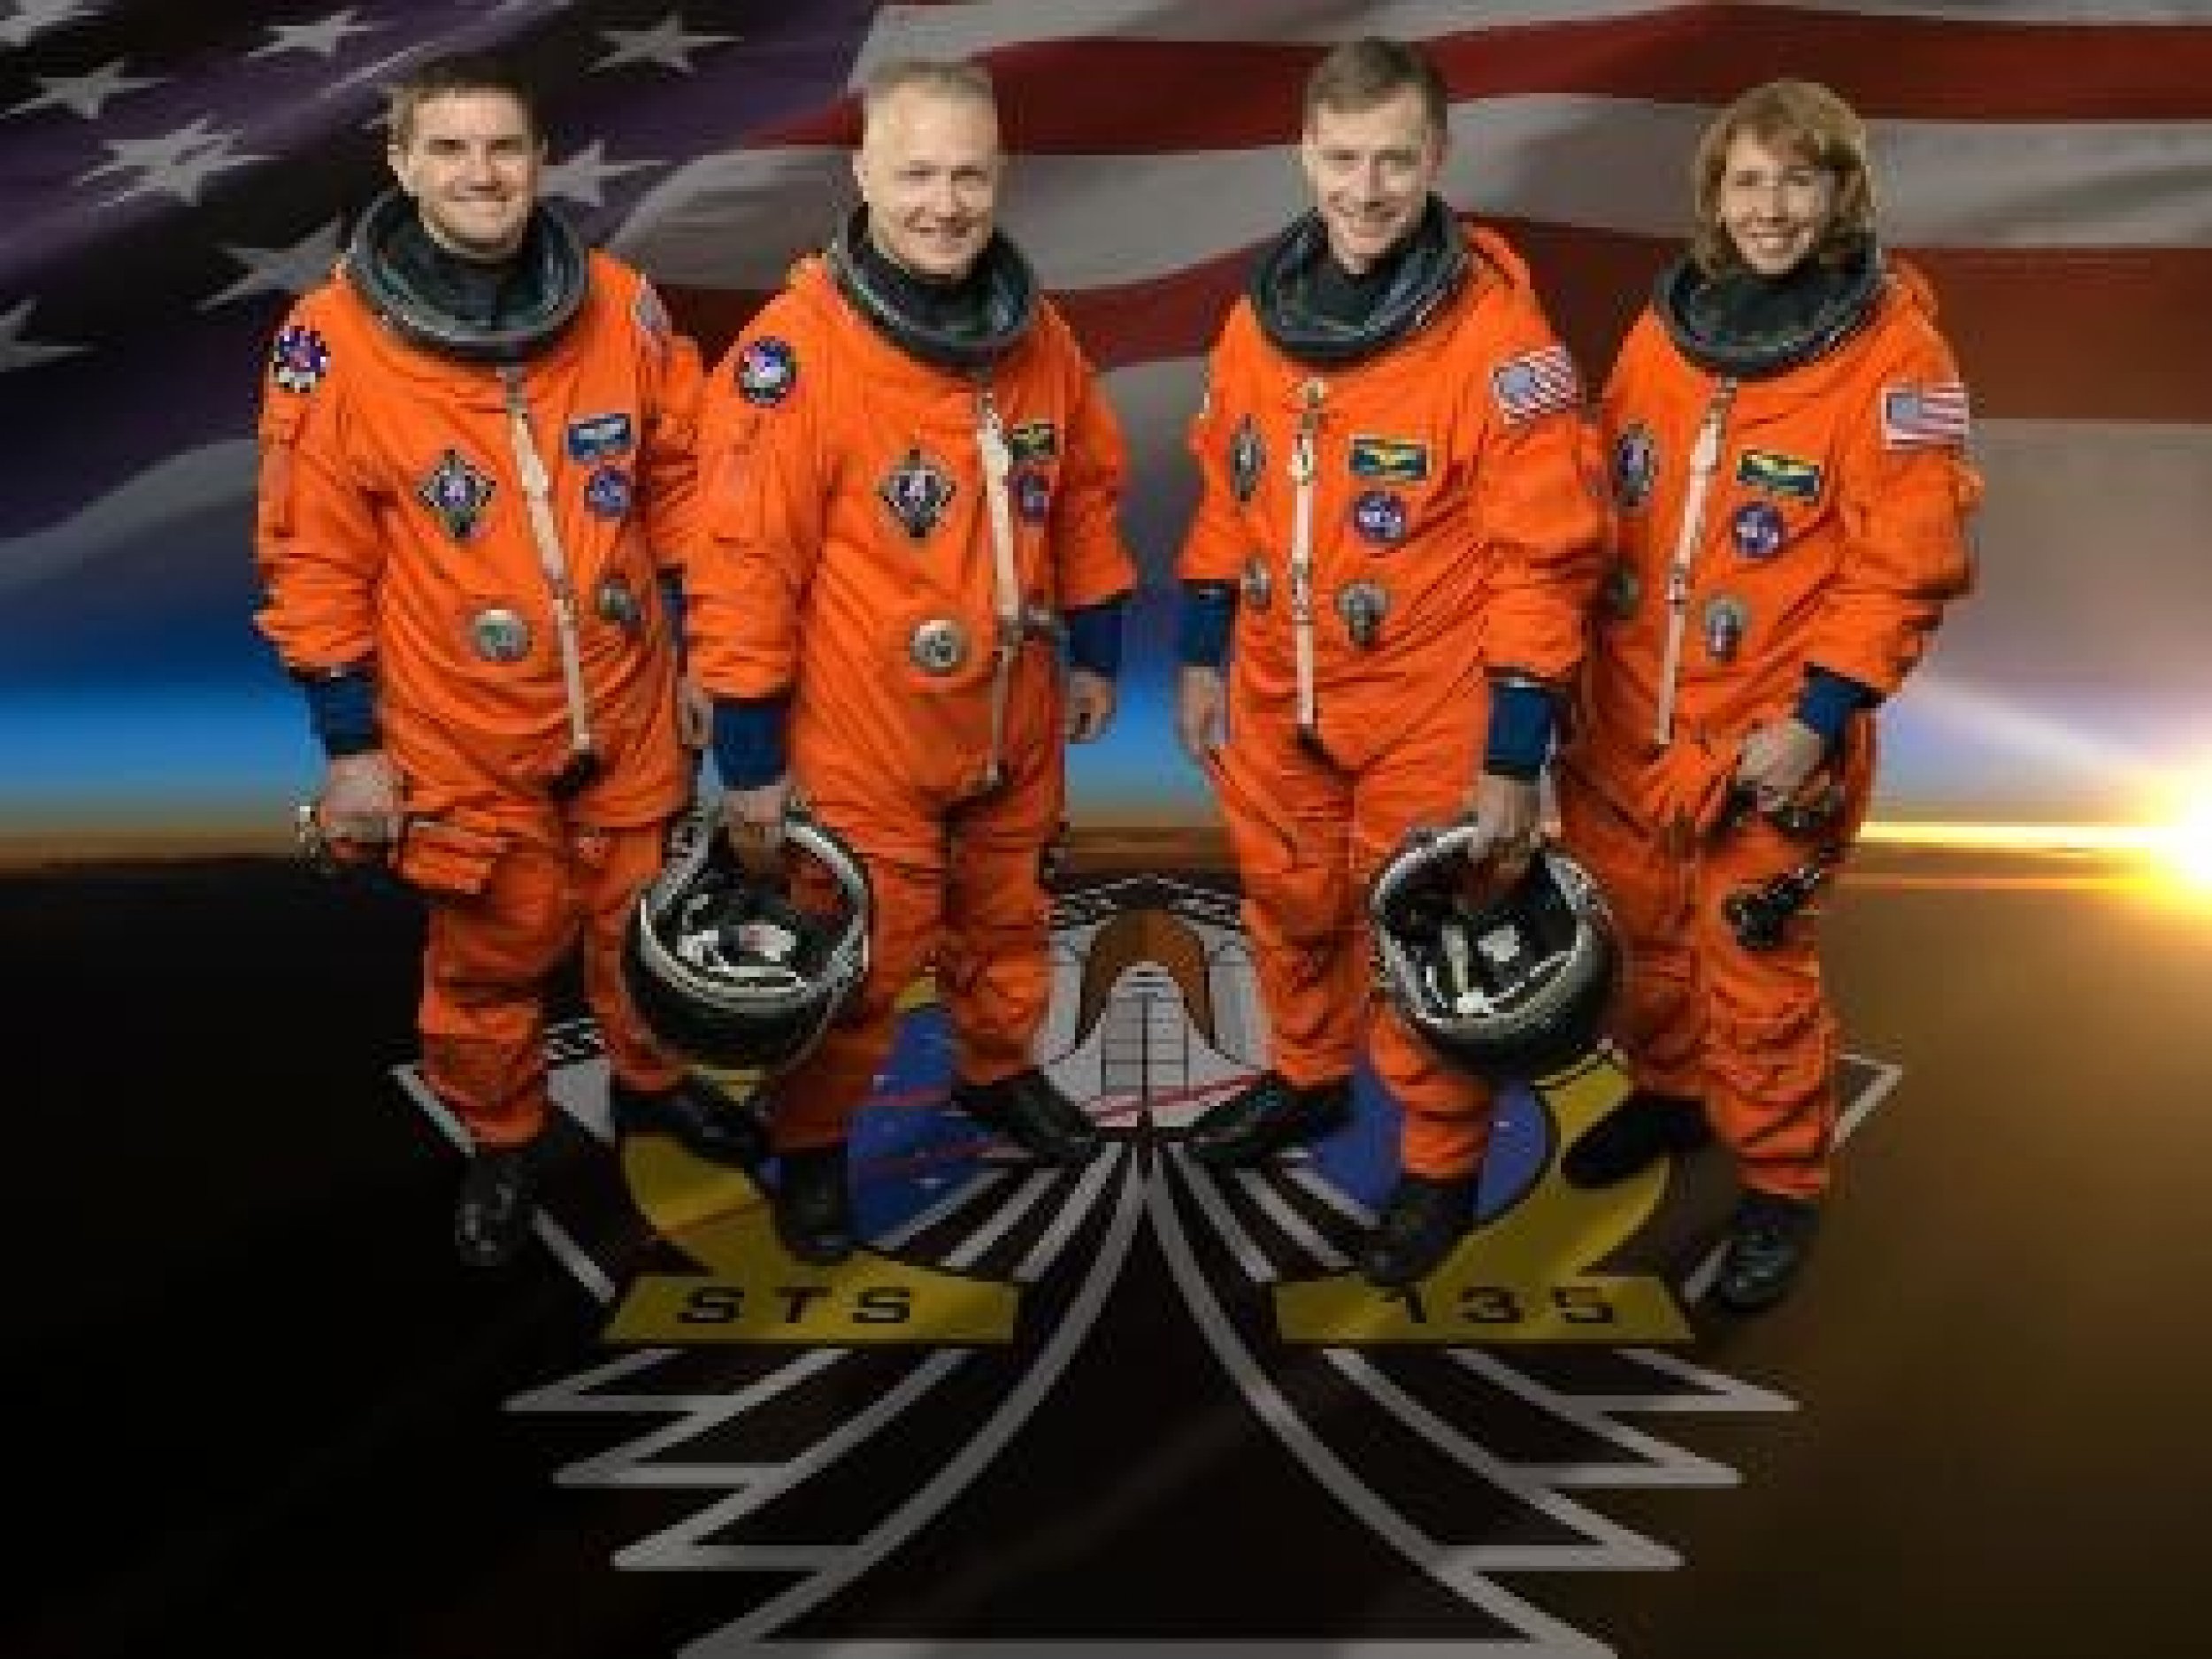 STS-135 Crew Portrait